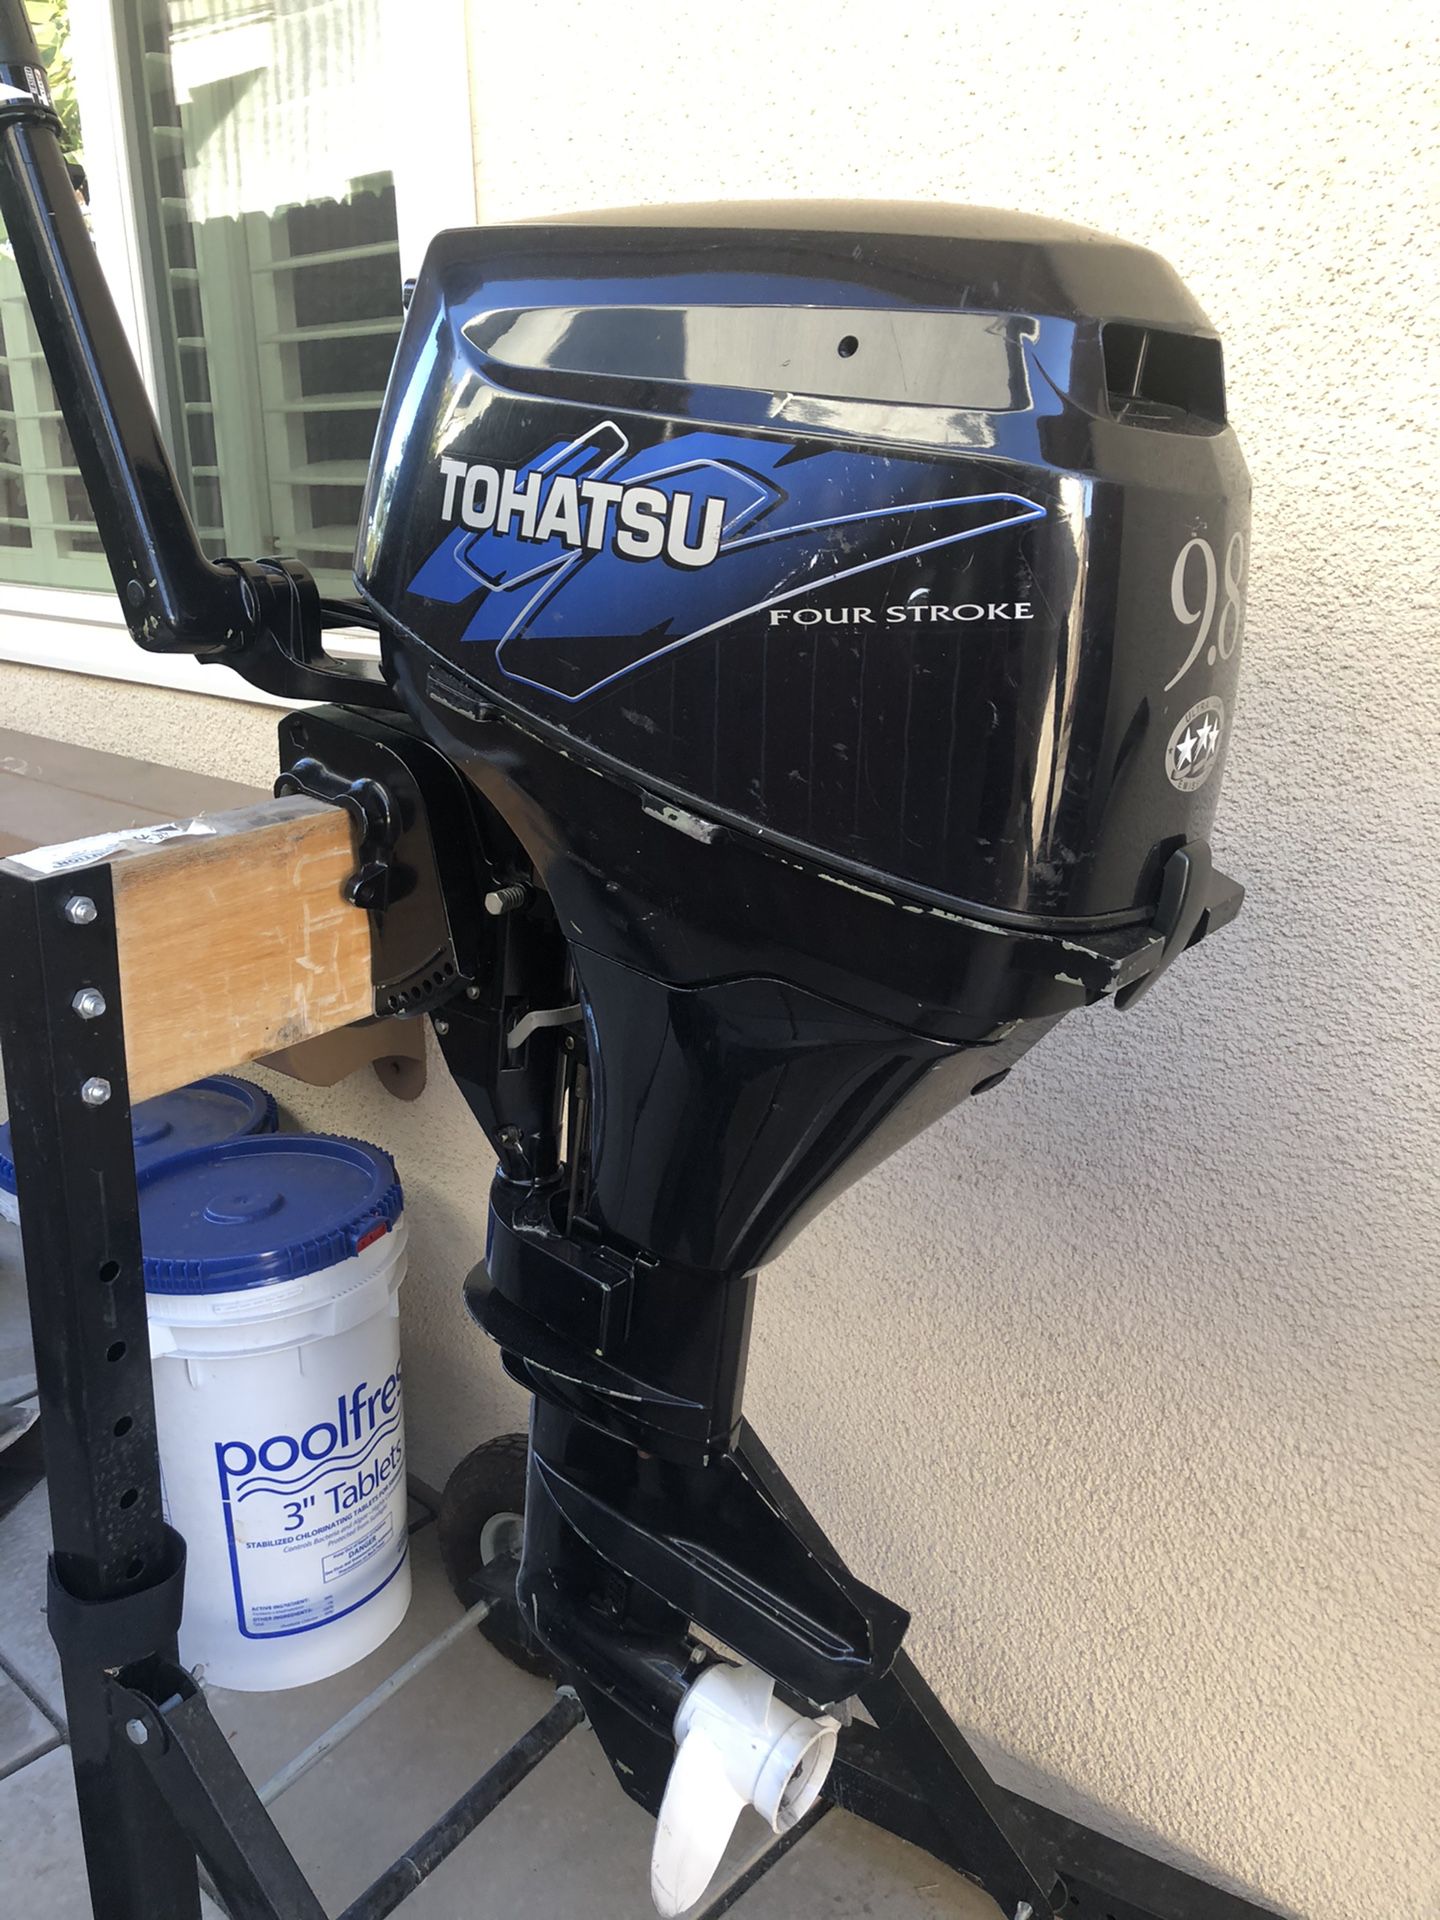 Tohatsu 9.8hp outboard motor